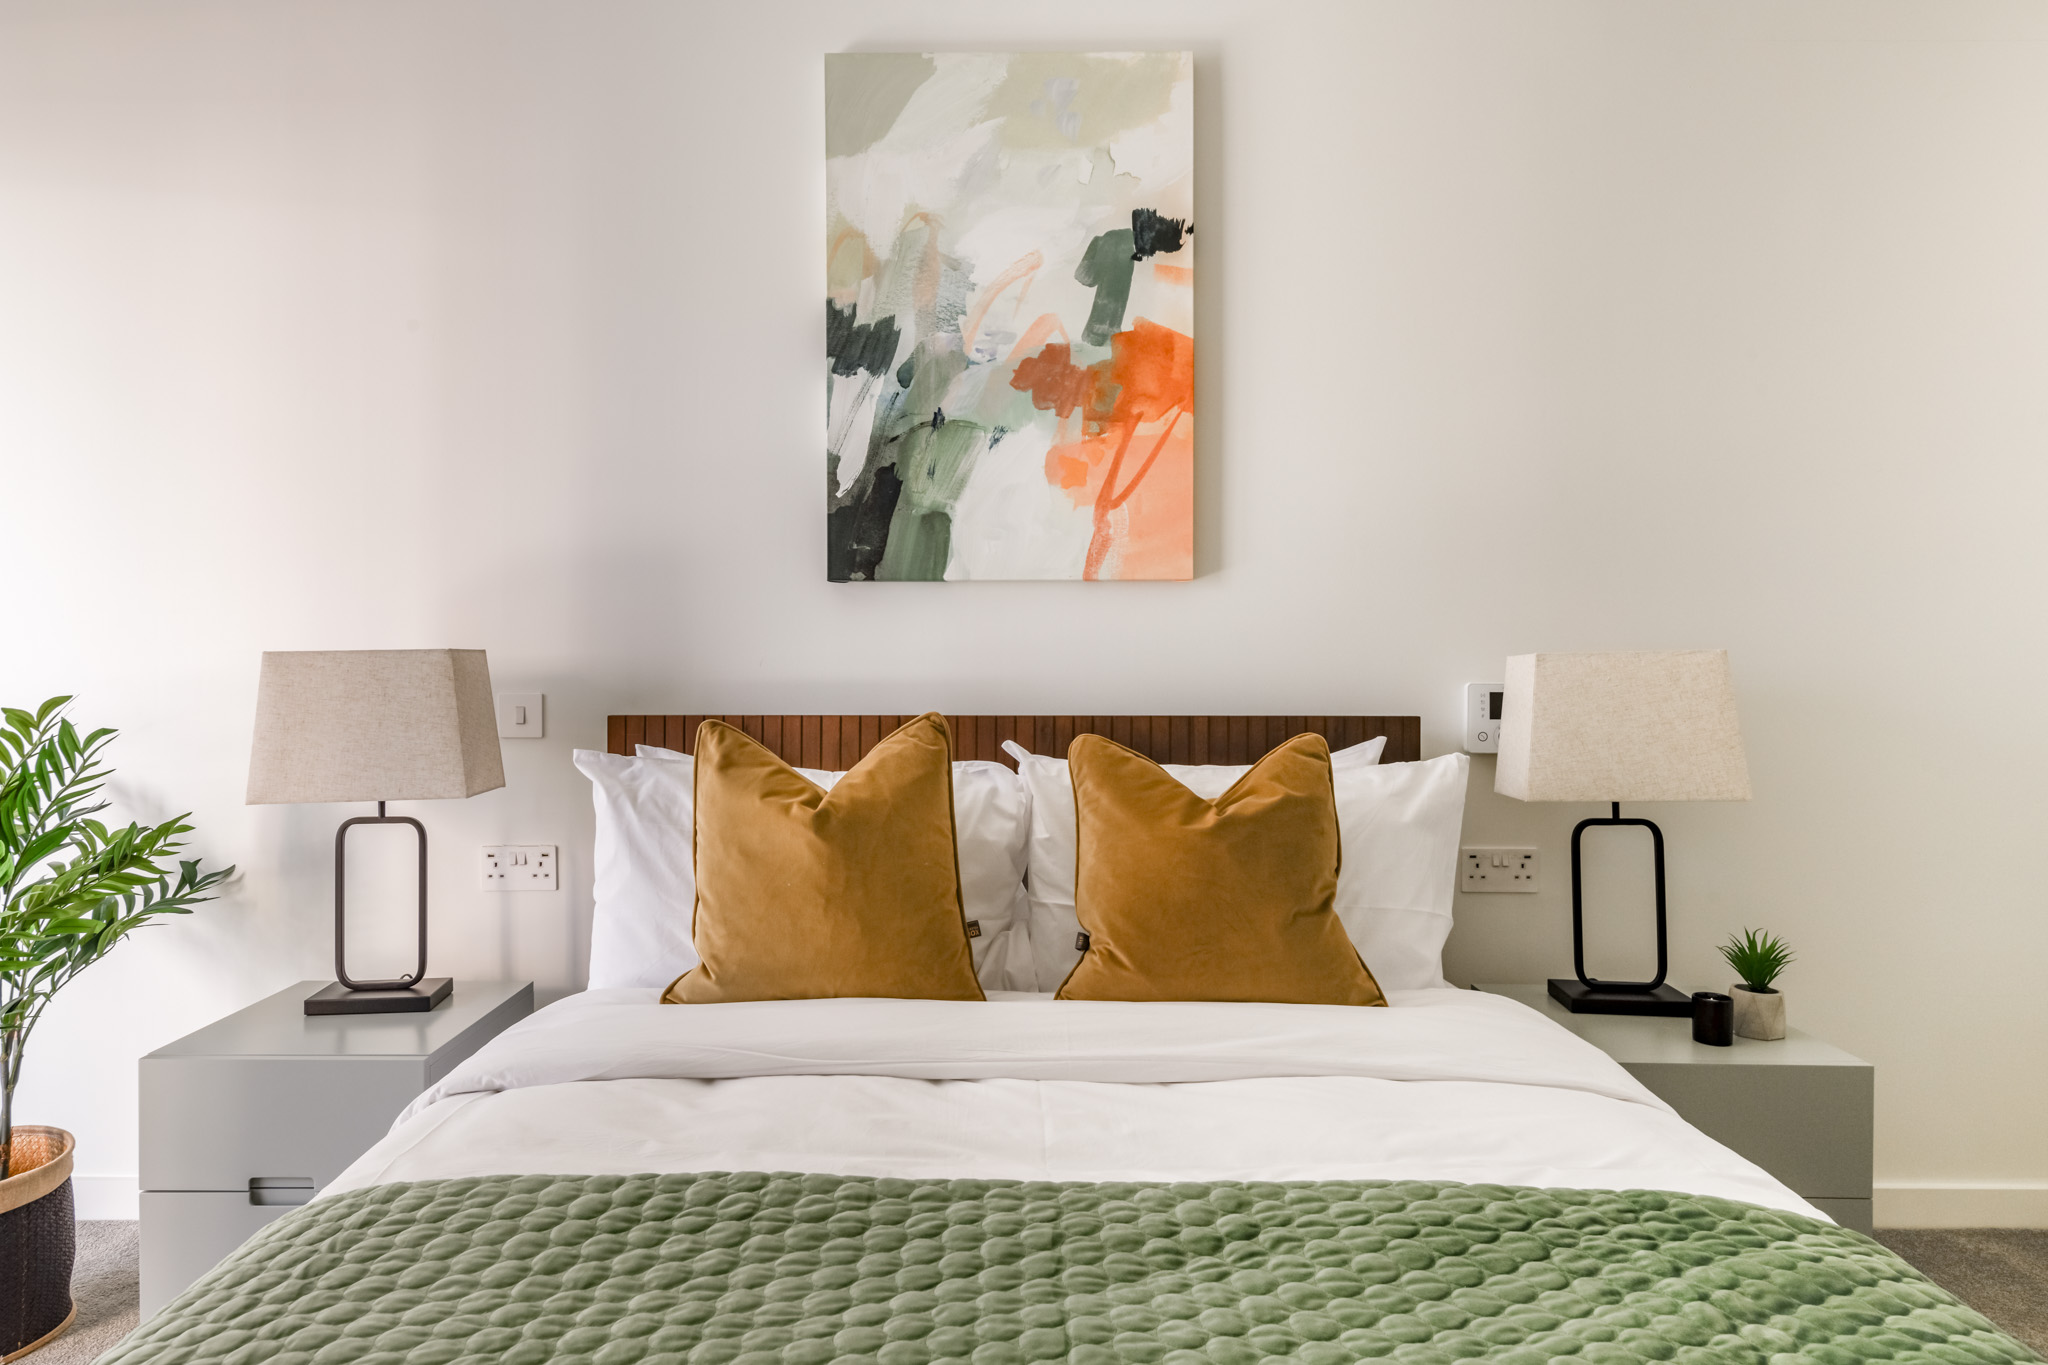 Bedroom - One Bedroom Apartment - Urban rest Battersea Apartments - London - Urban Rest